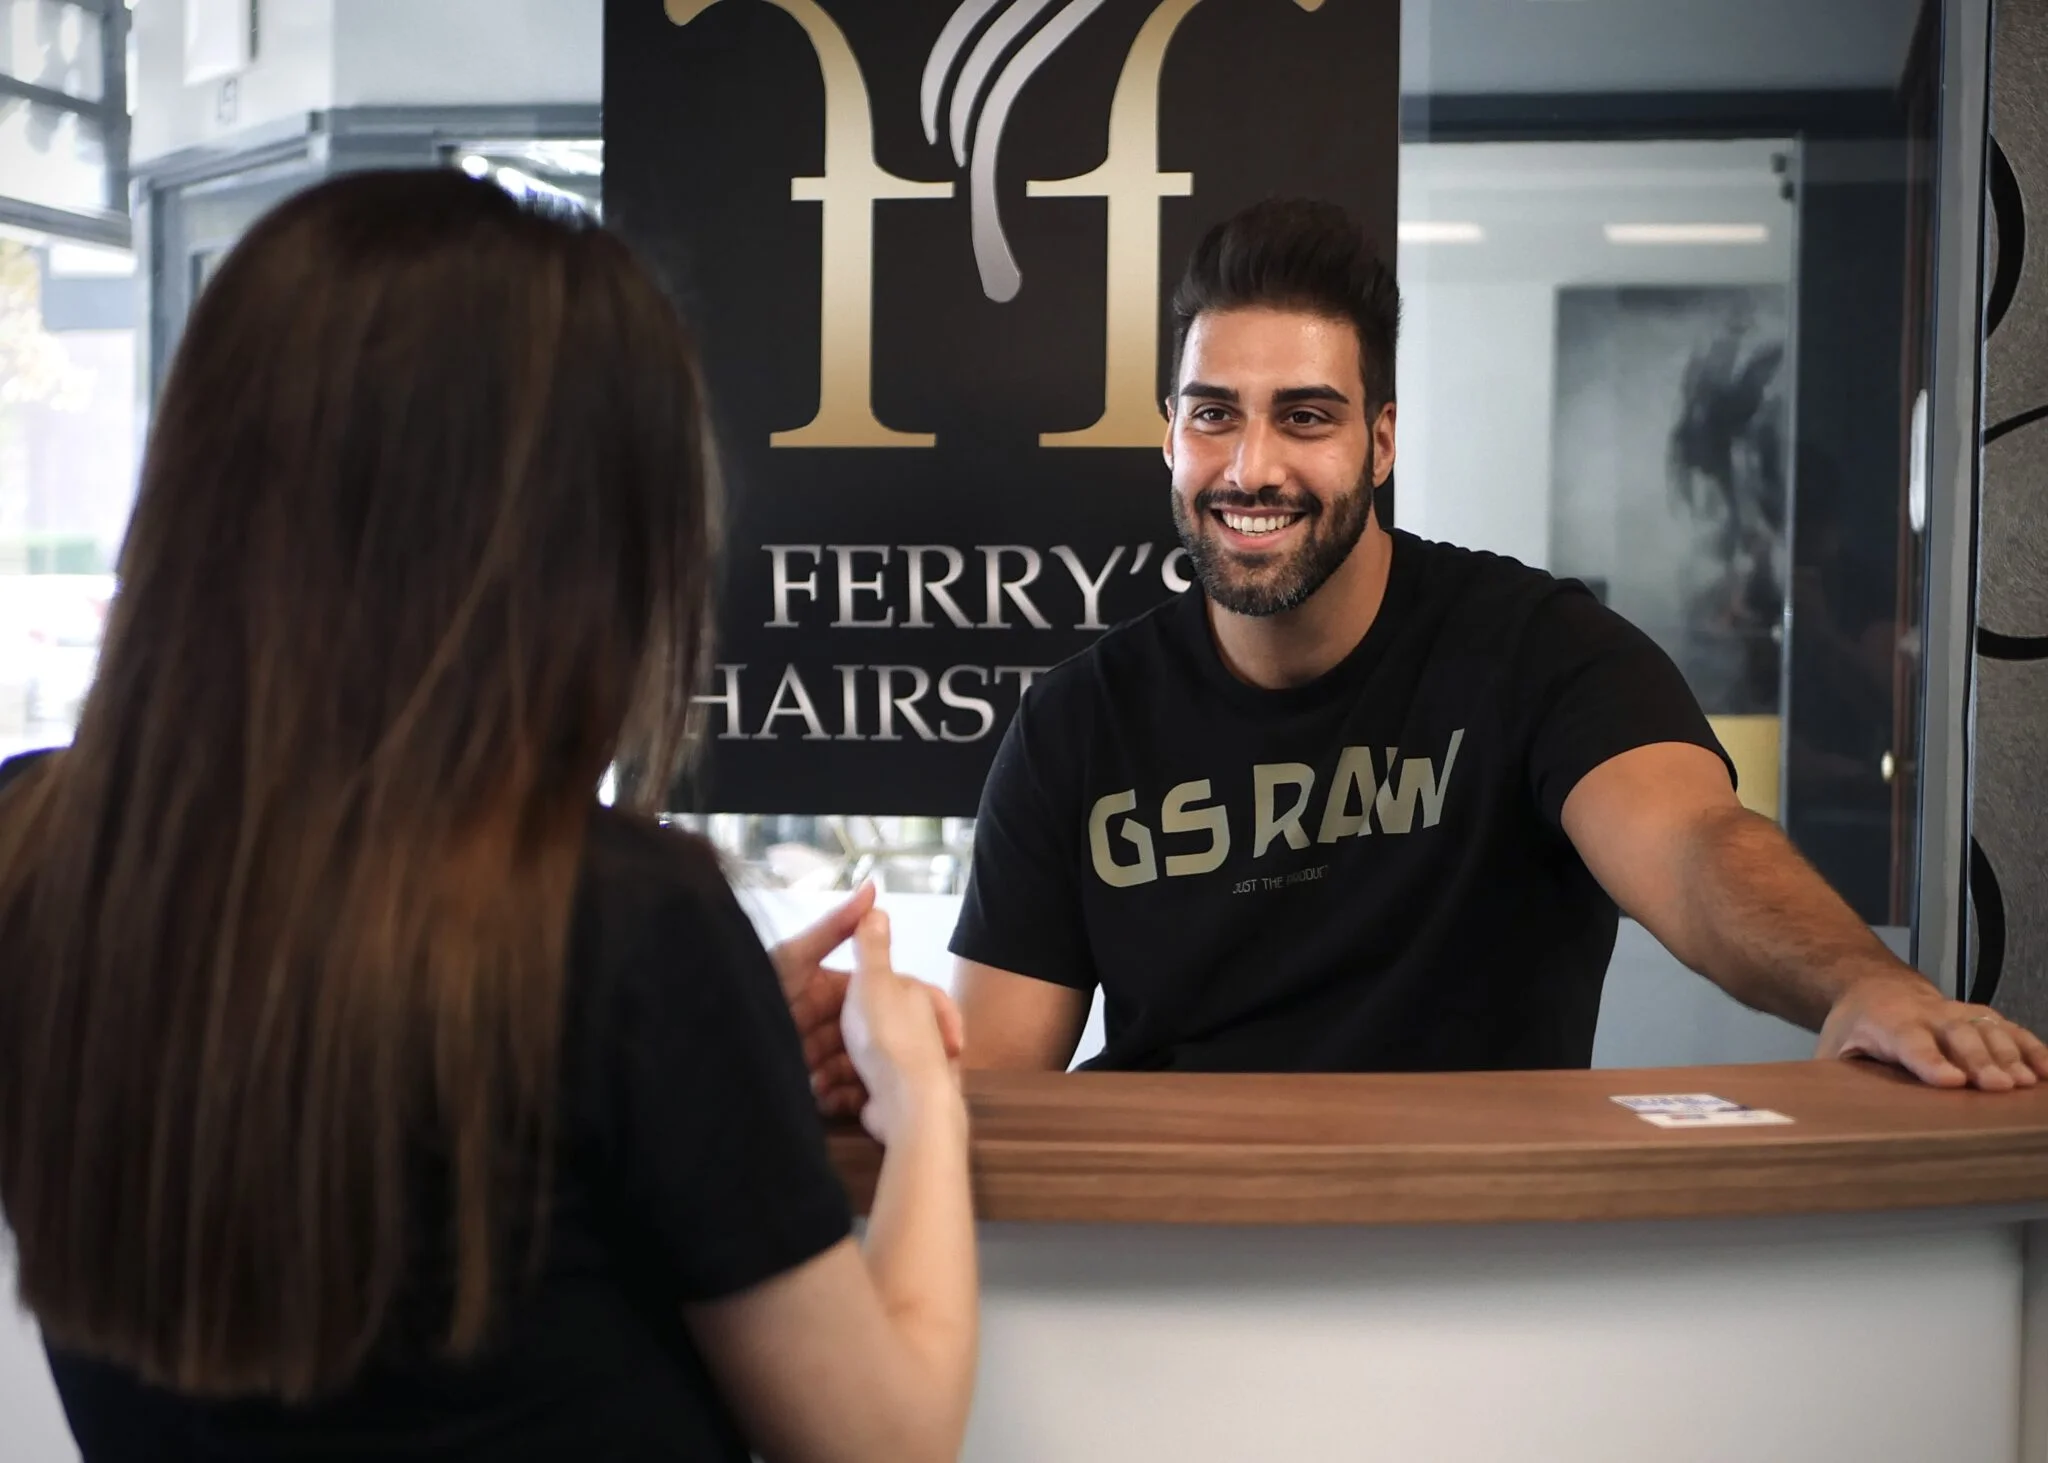 Ferry's Hair Studio - Dé Specialist in balayage, highlights en botox haar behandeling inclusief proteïne.